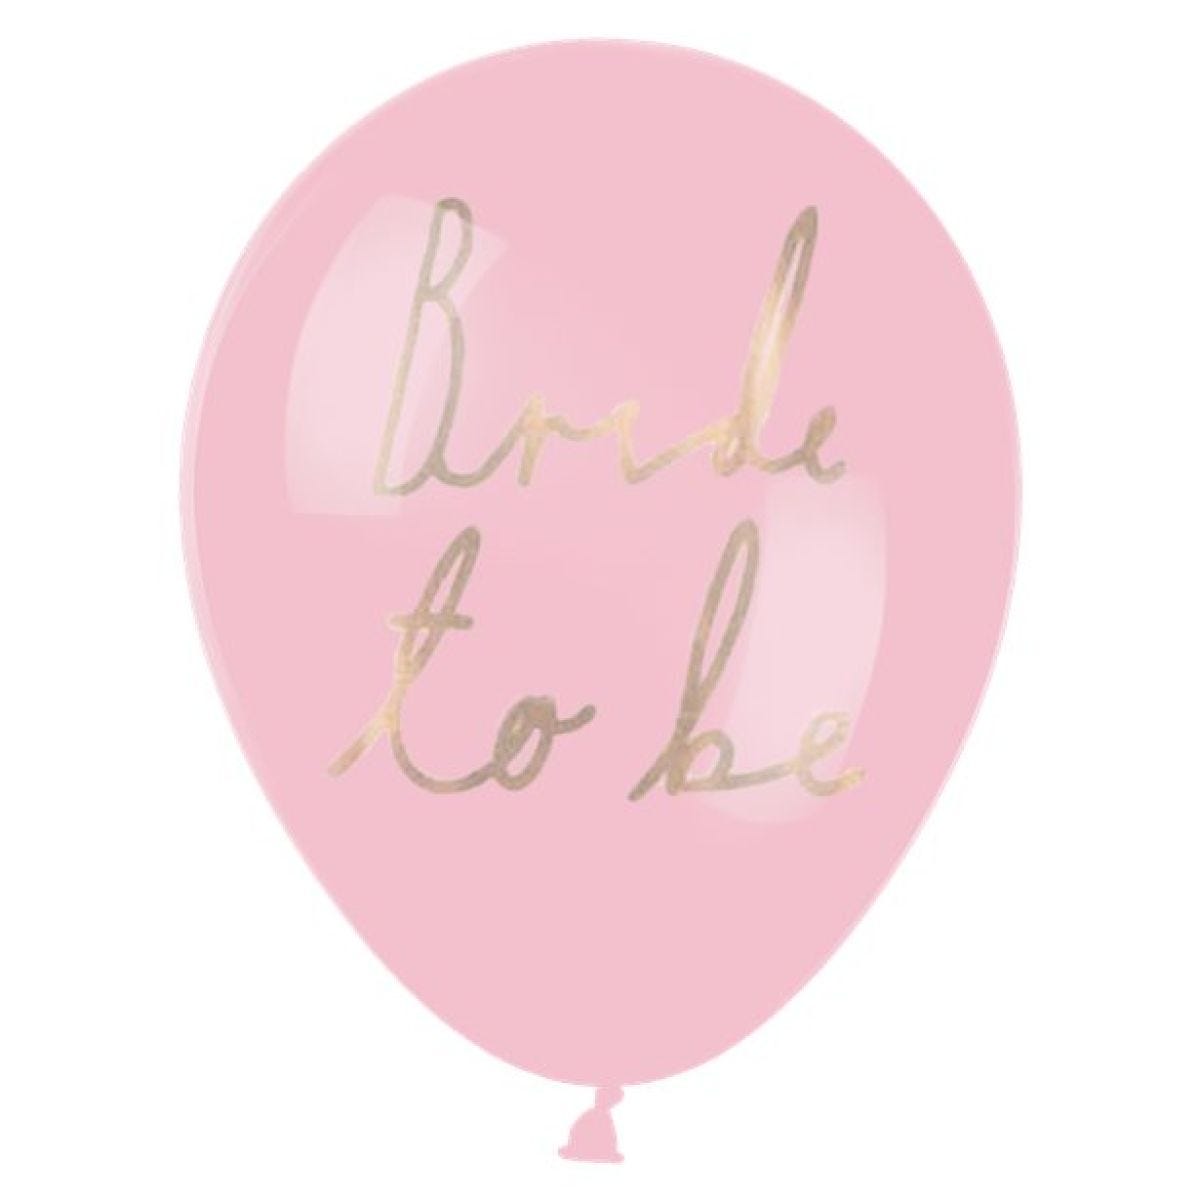 Bride To Be Balloons - 12" Latex (6pk)